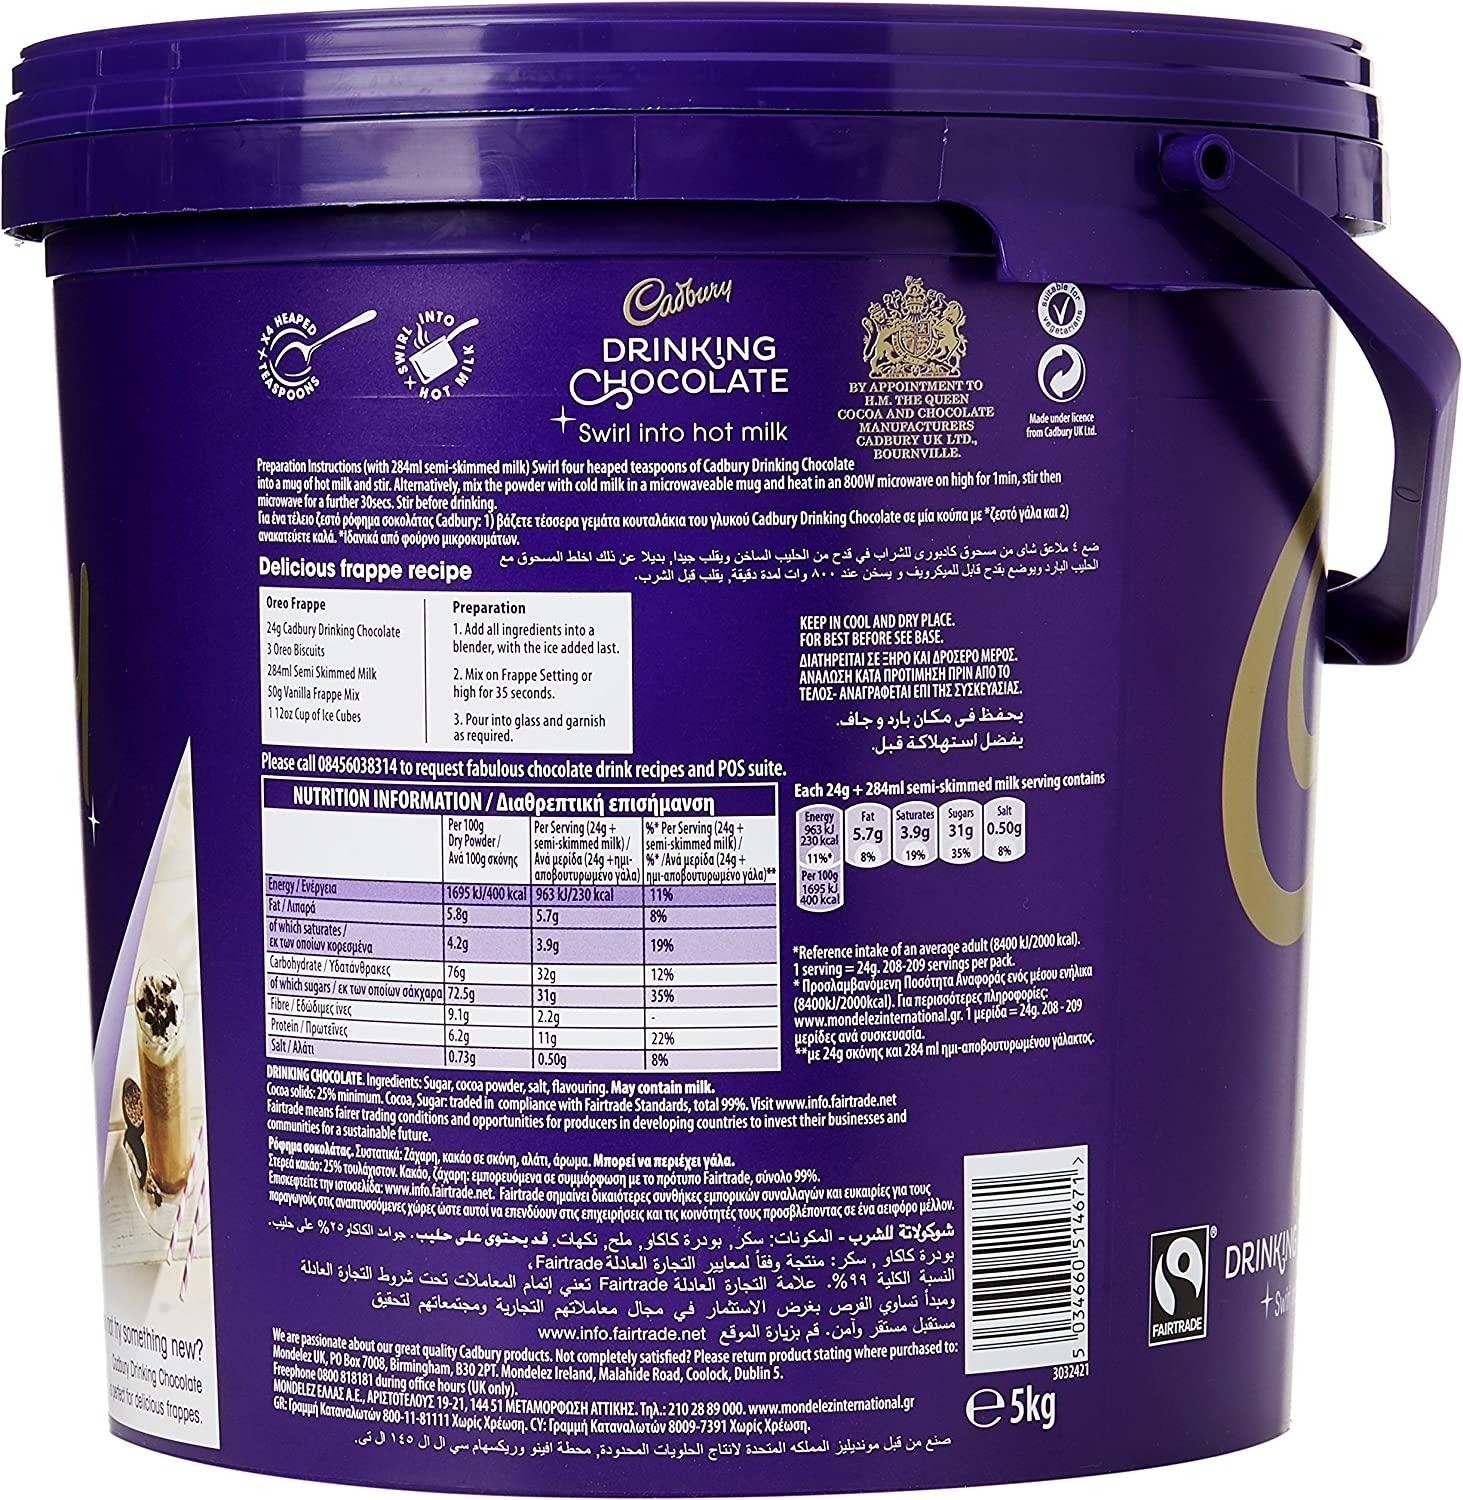 Cadbury: Hot Chocolate Tub 5kg (Bulk Catering Tub Pail - Add Milk) - Vending Superstore